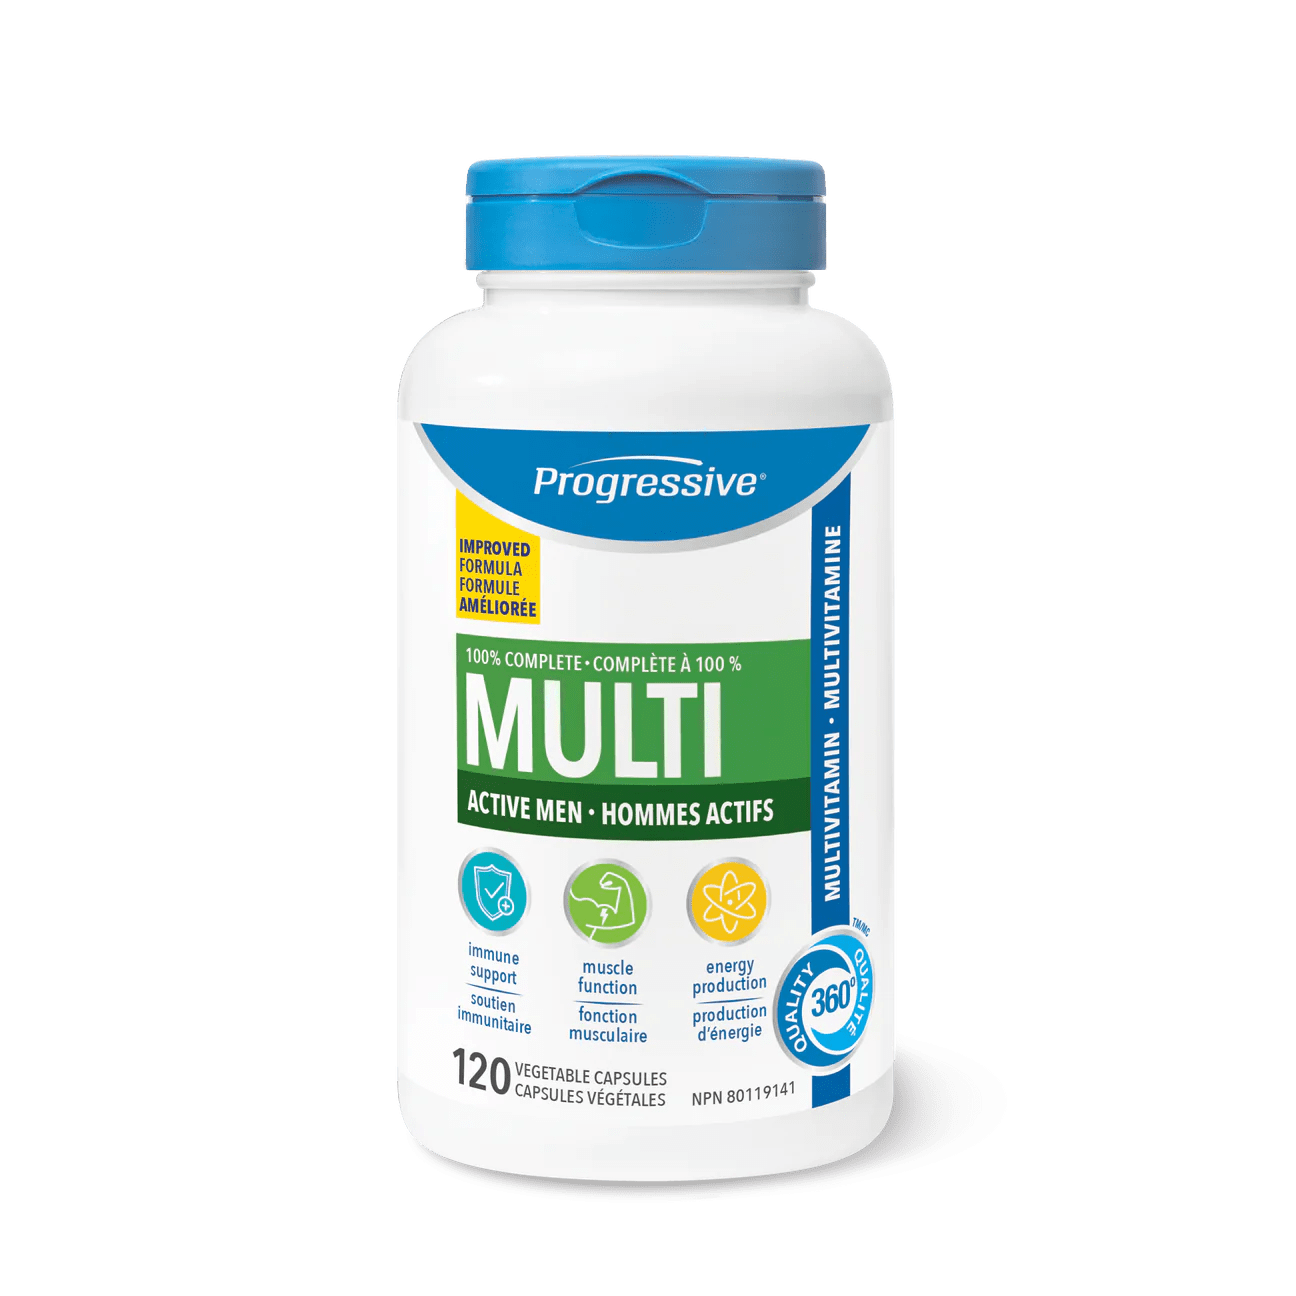 PROGRESSIVE Suppléments Multivitamines (homme actif) 120vcaps